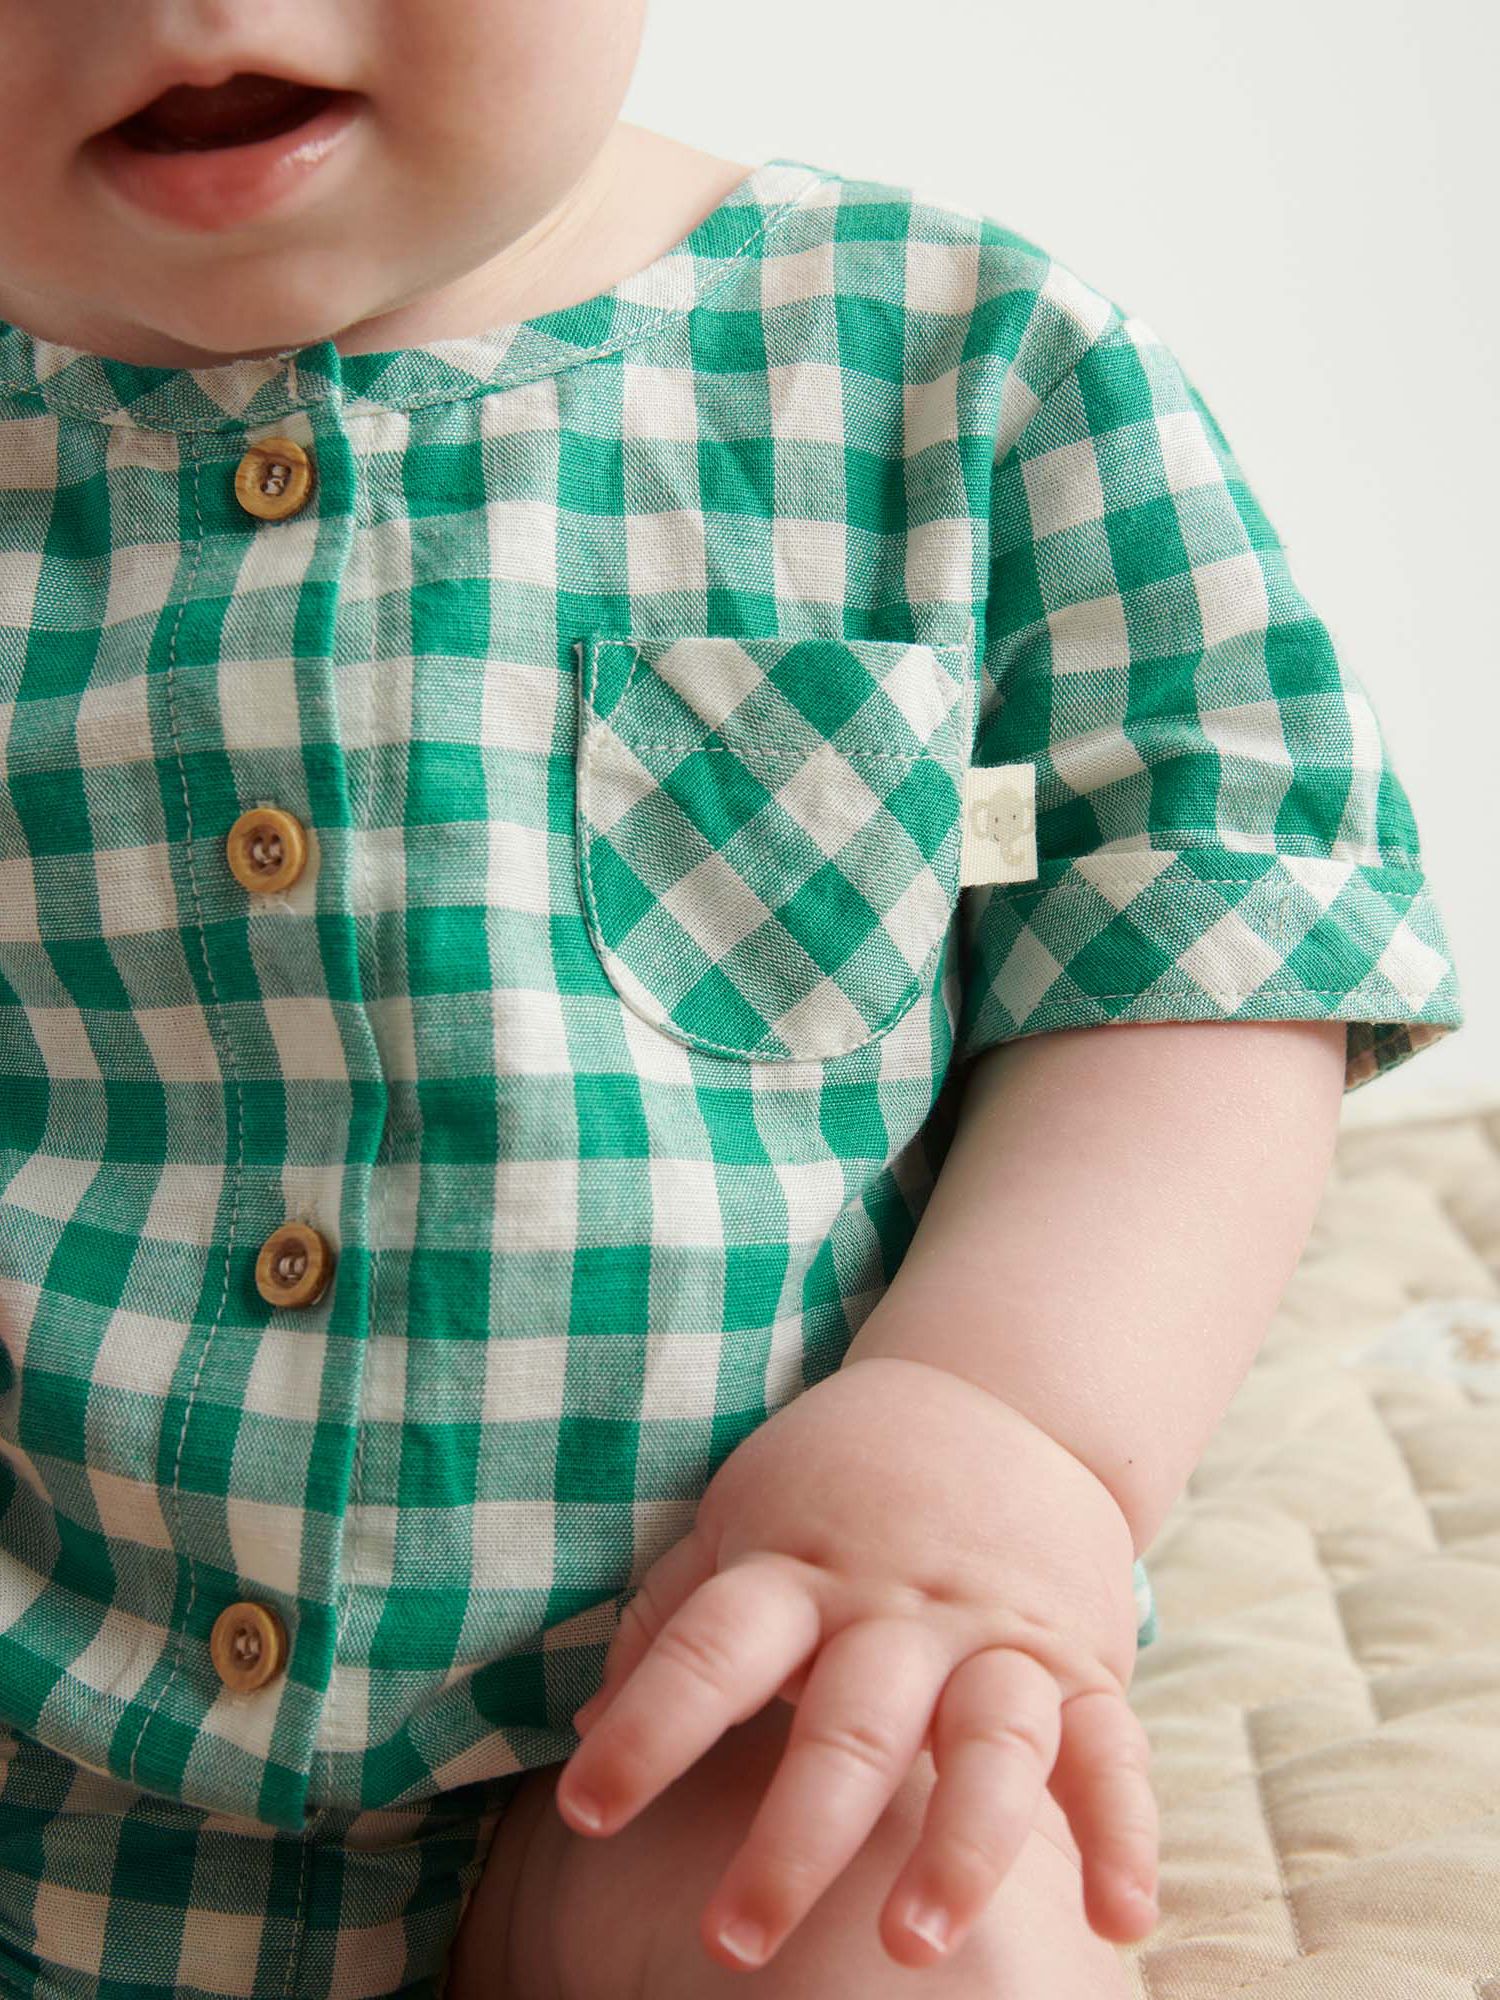 Purebaby Baby Organic Cotton & Linen Blend Gingham Bodysuit, Green, 3-6 months